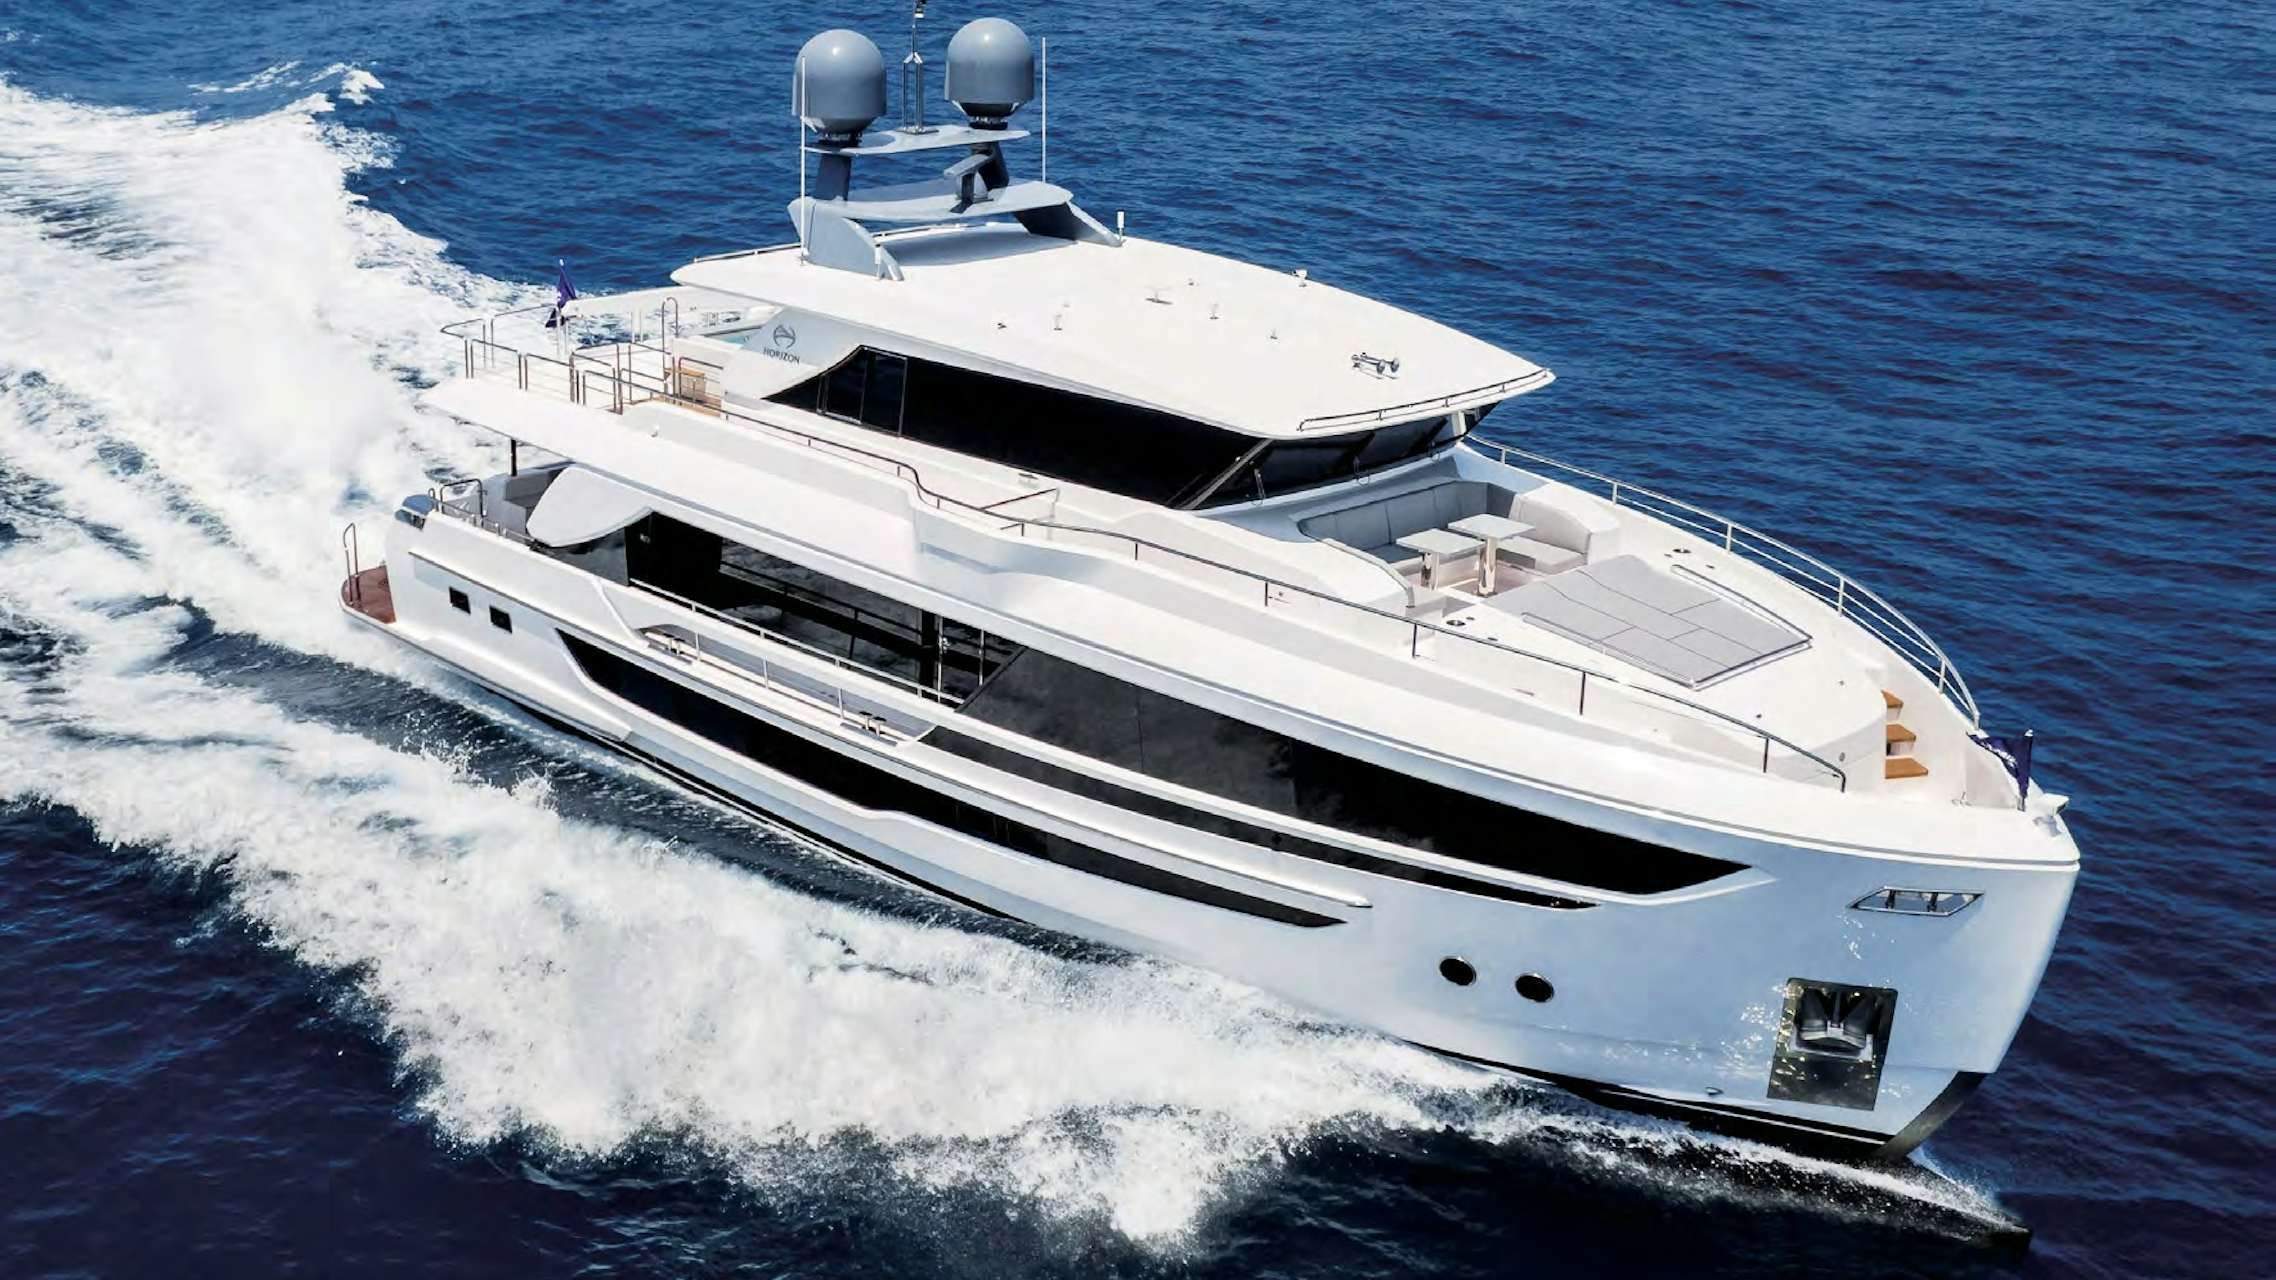 The Horizon FD 80 yacht cruising at speed on the open water, showcasing its sleek design.